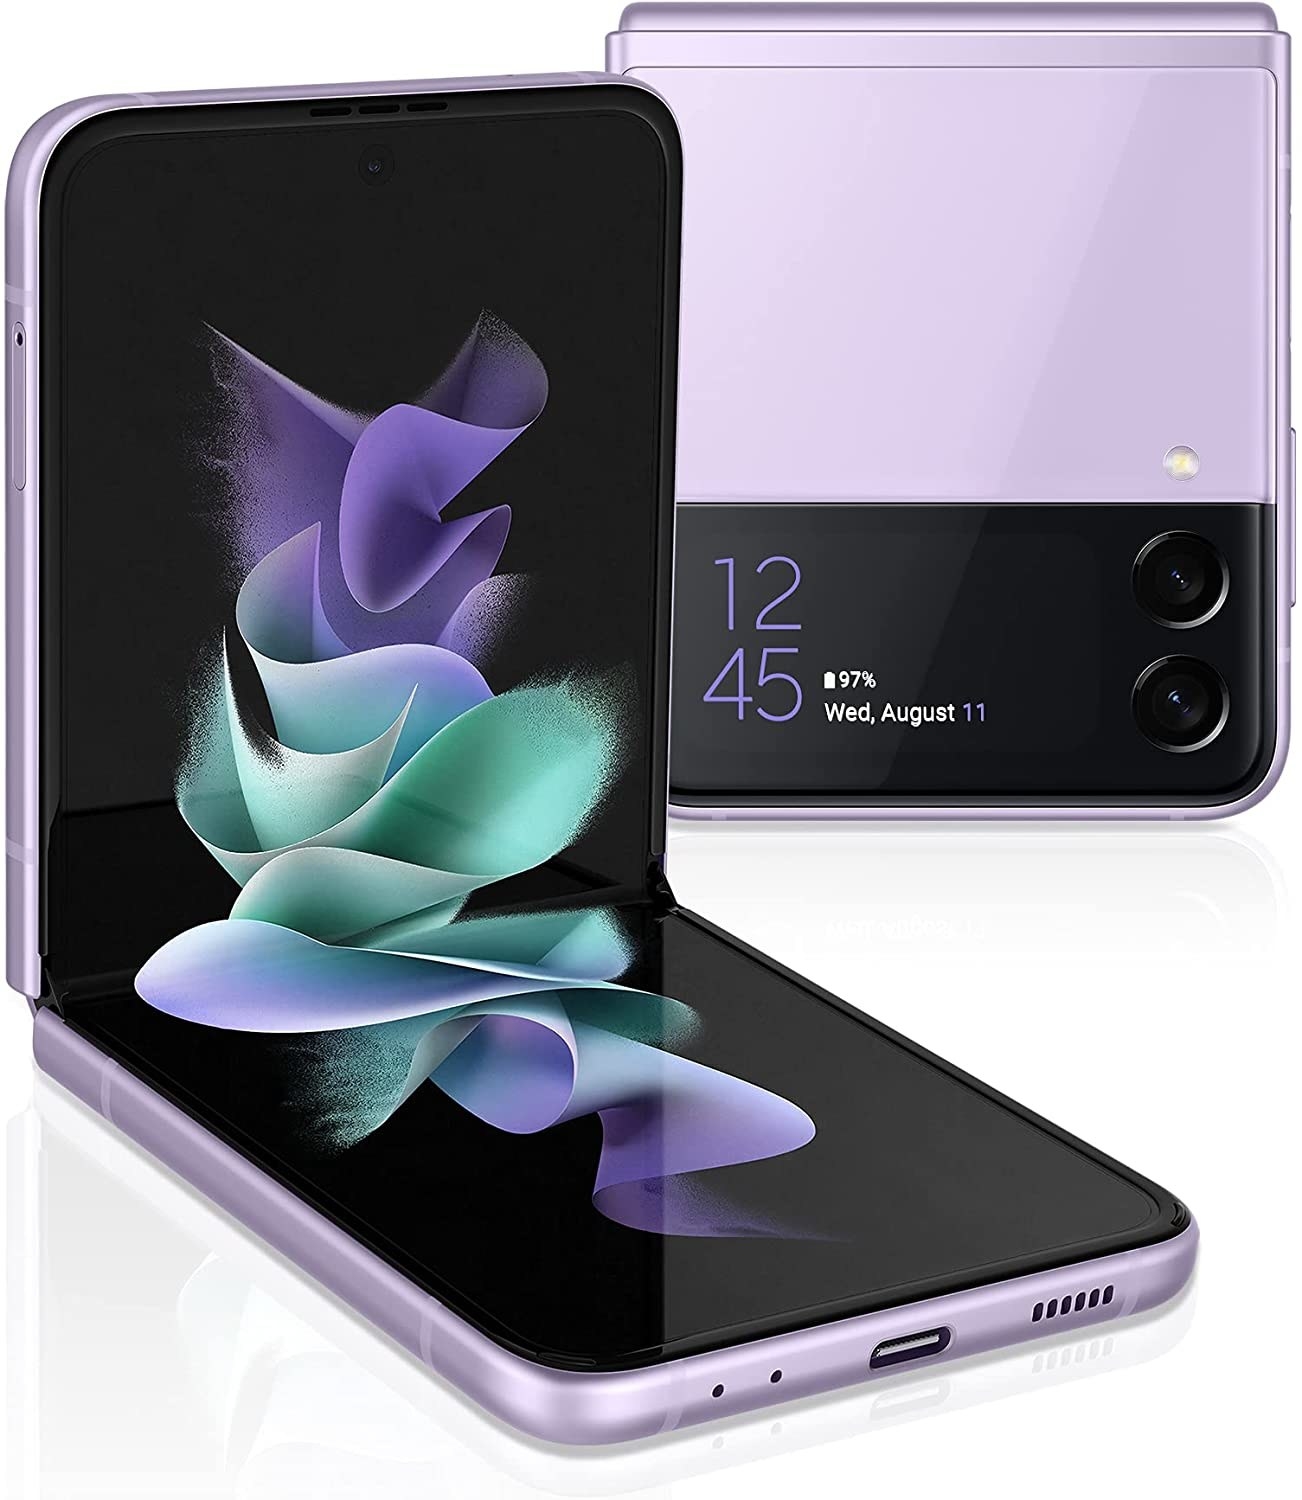 the purple phone